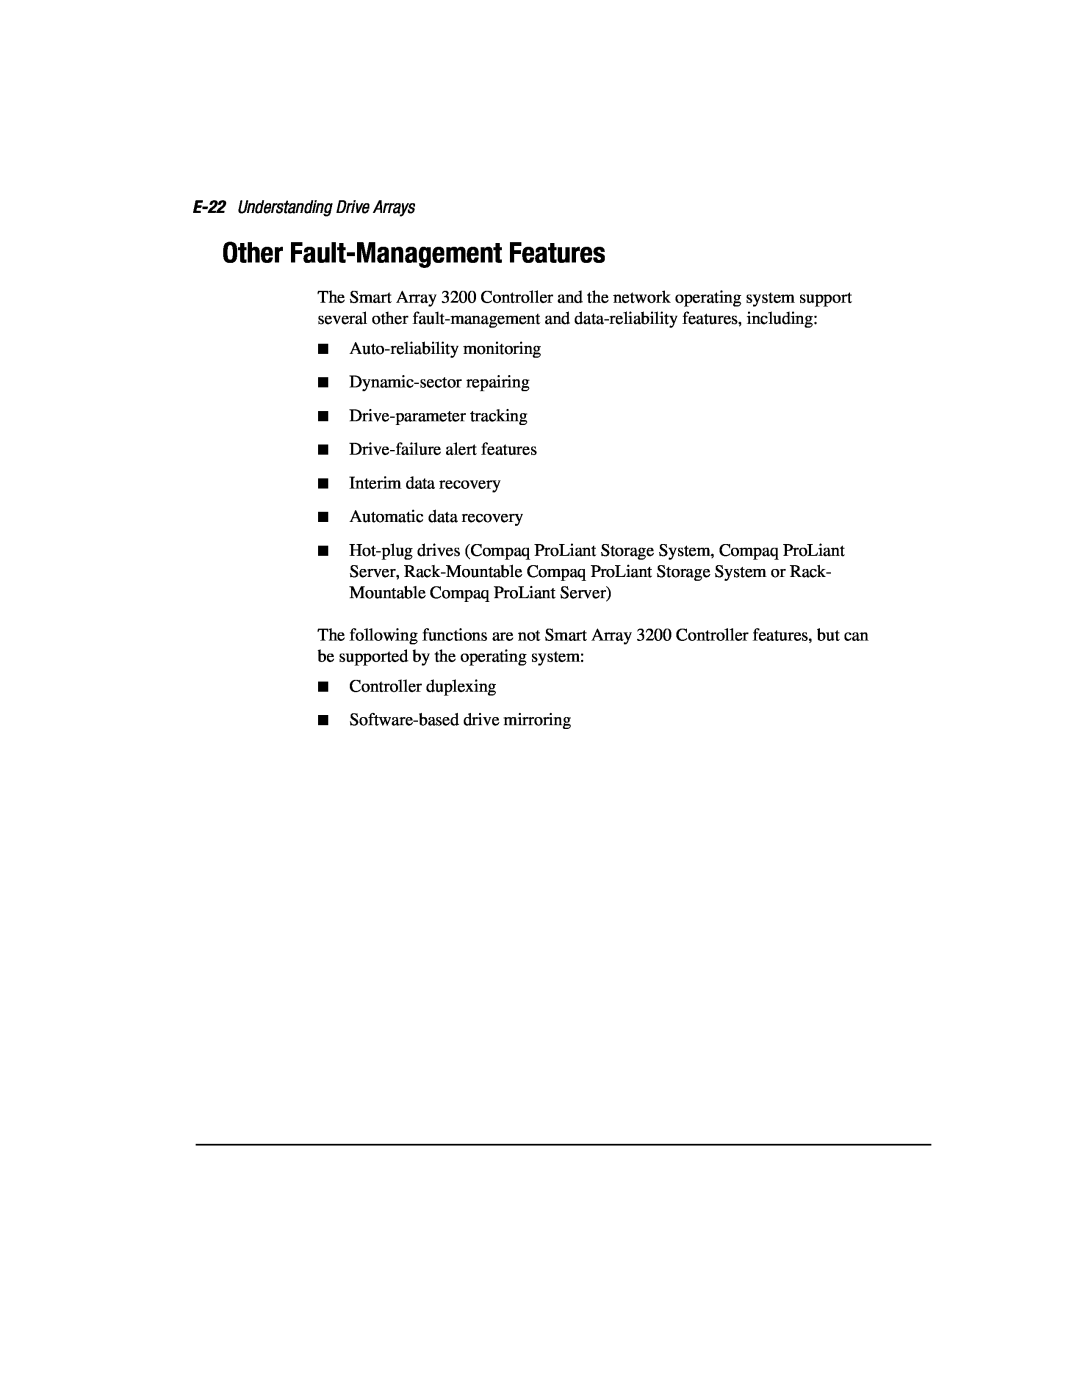 Compaq 3200 manual Other Fault-Management Features, E-22 Understanding Drive Arrays 